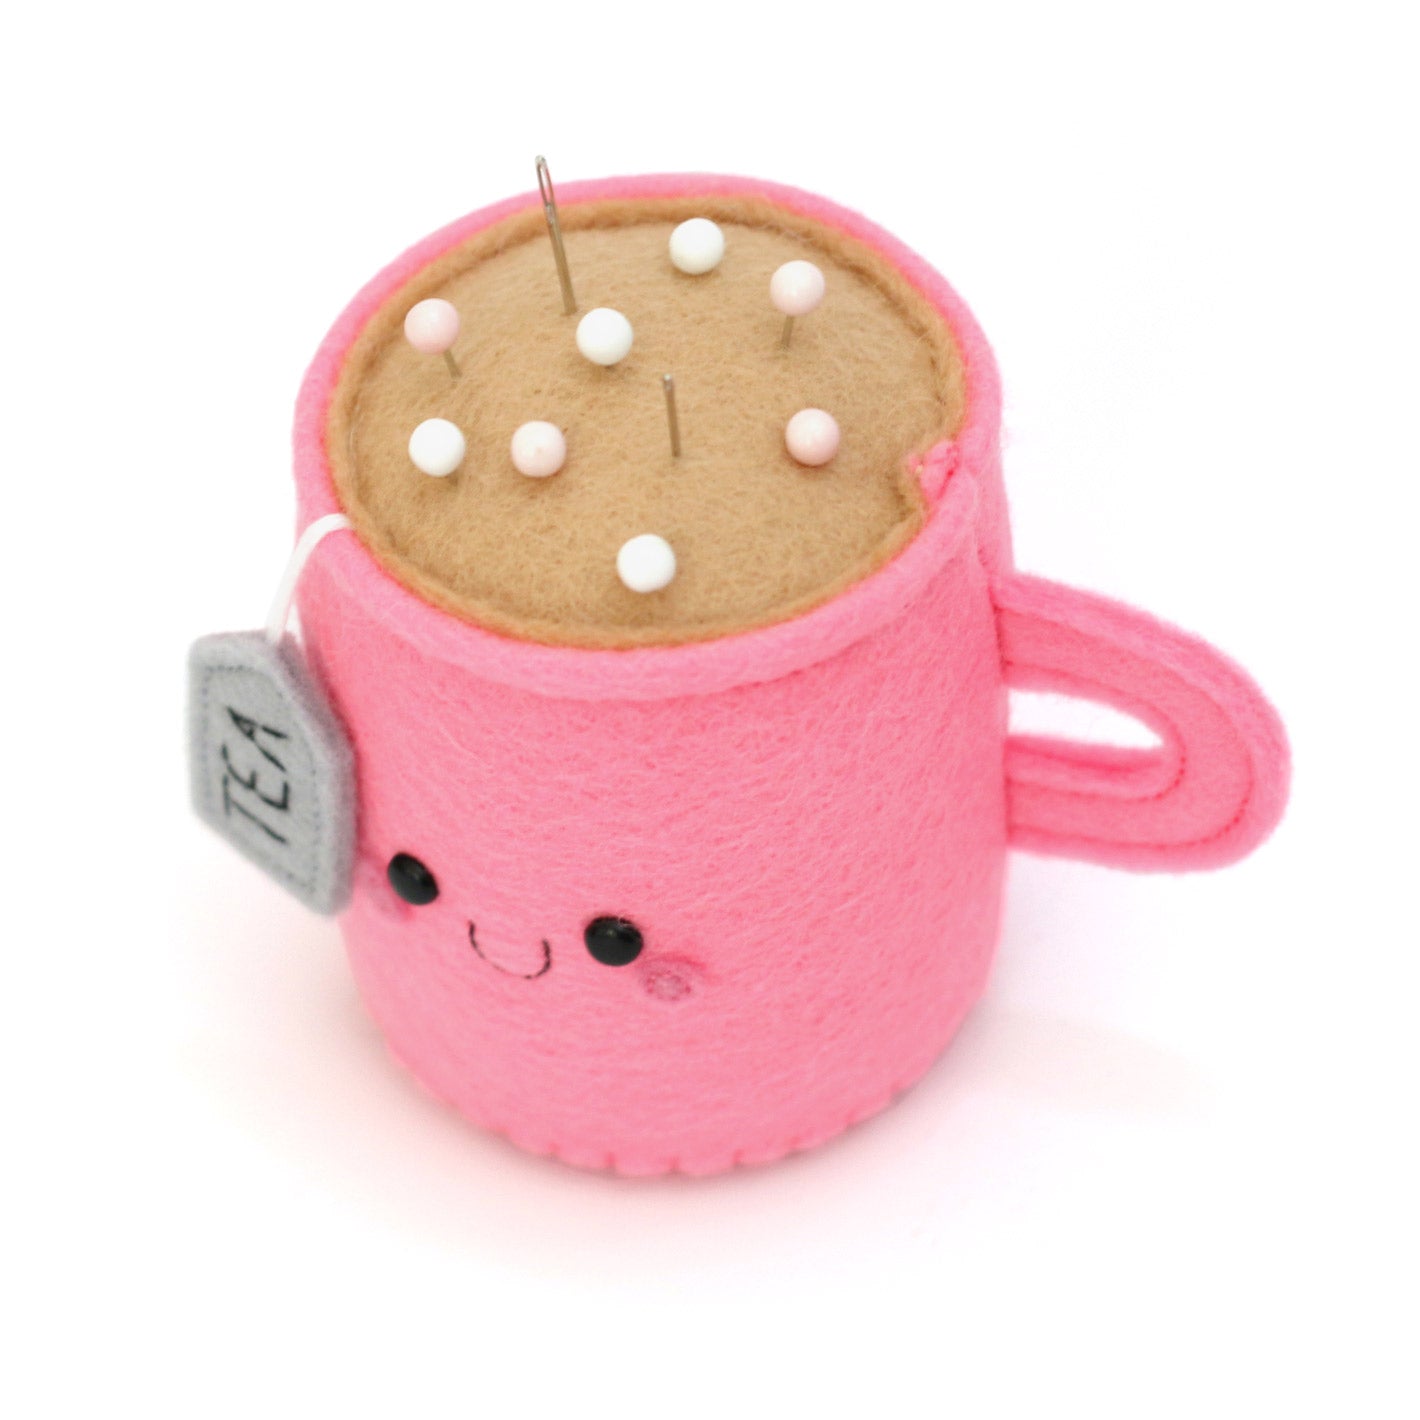 Bright pink teacup pincushion showing top of pincushion holding pins